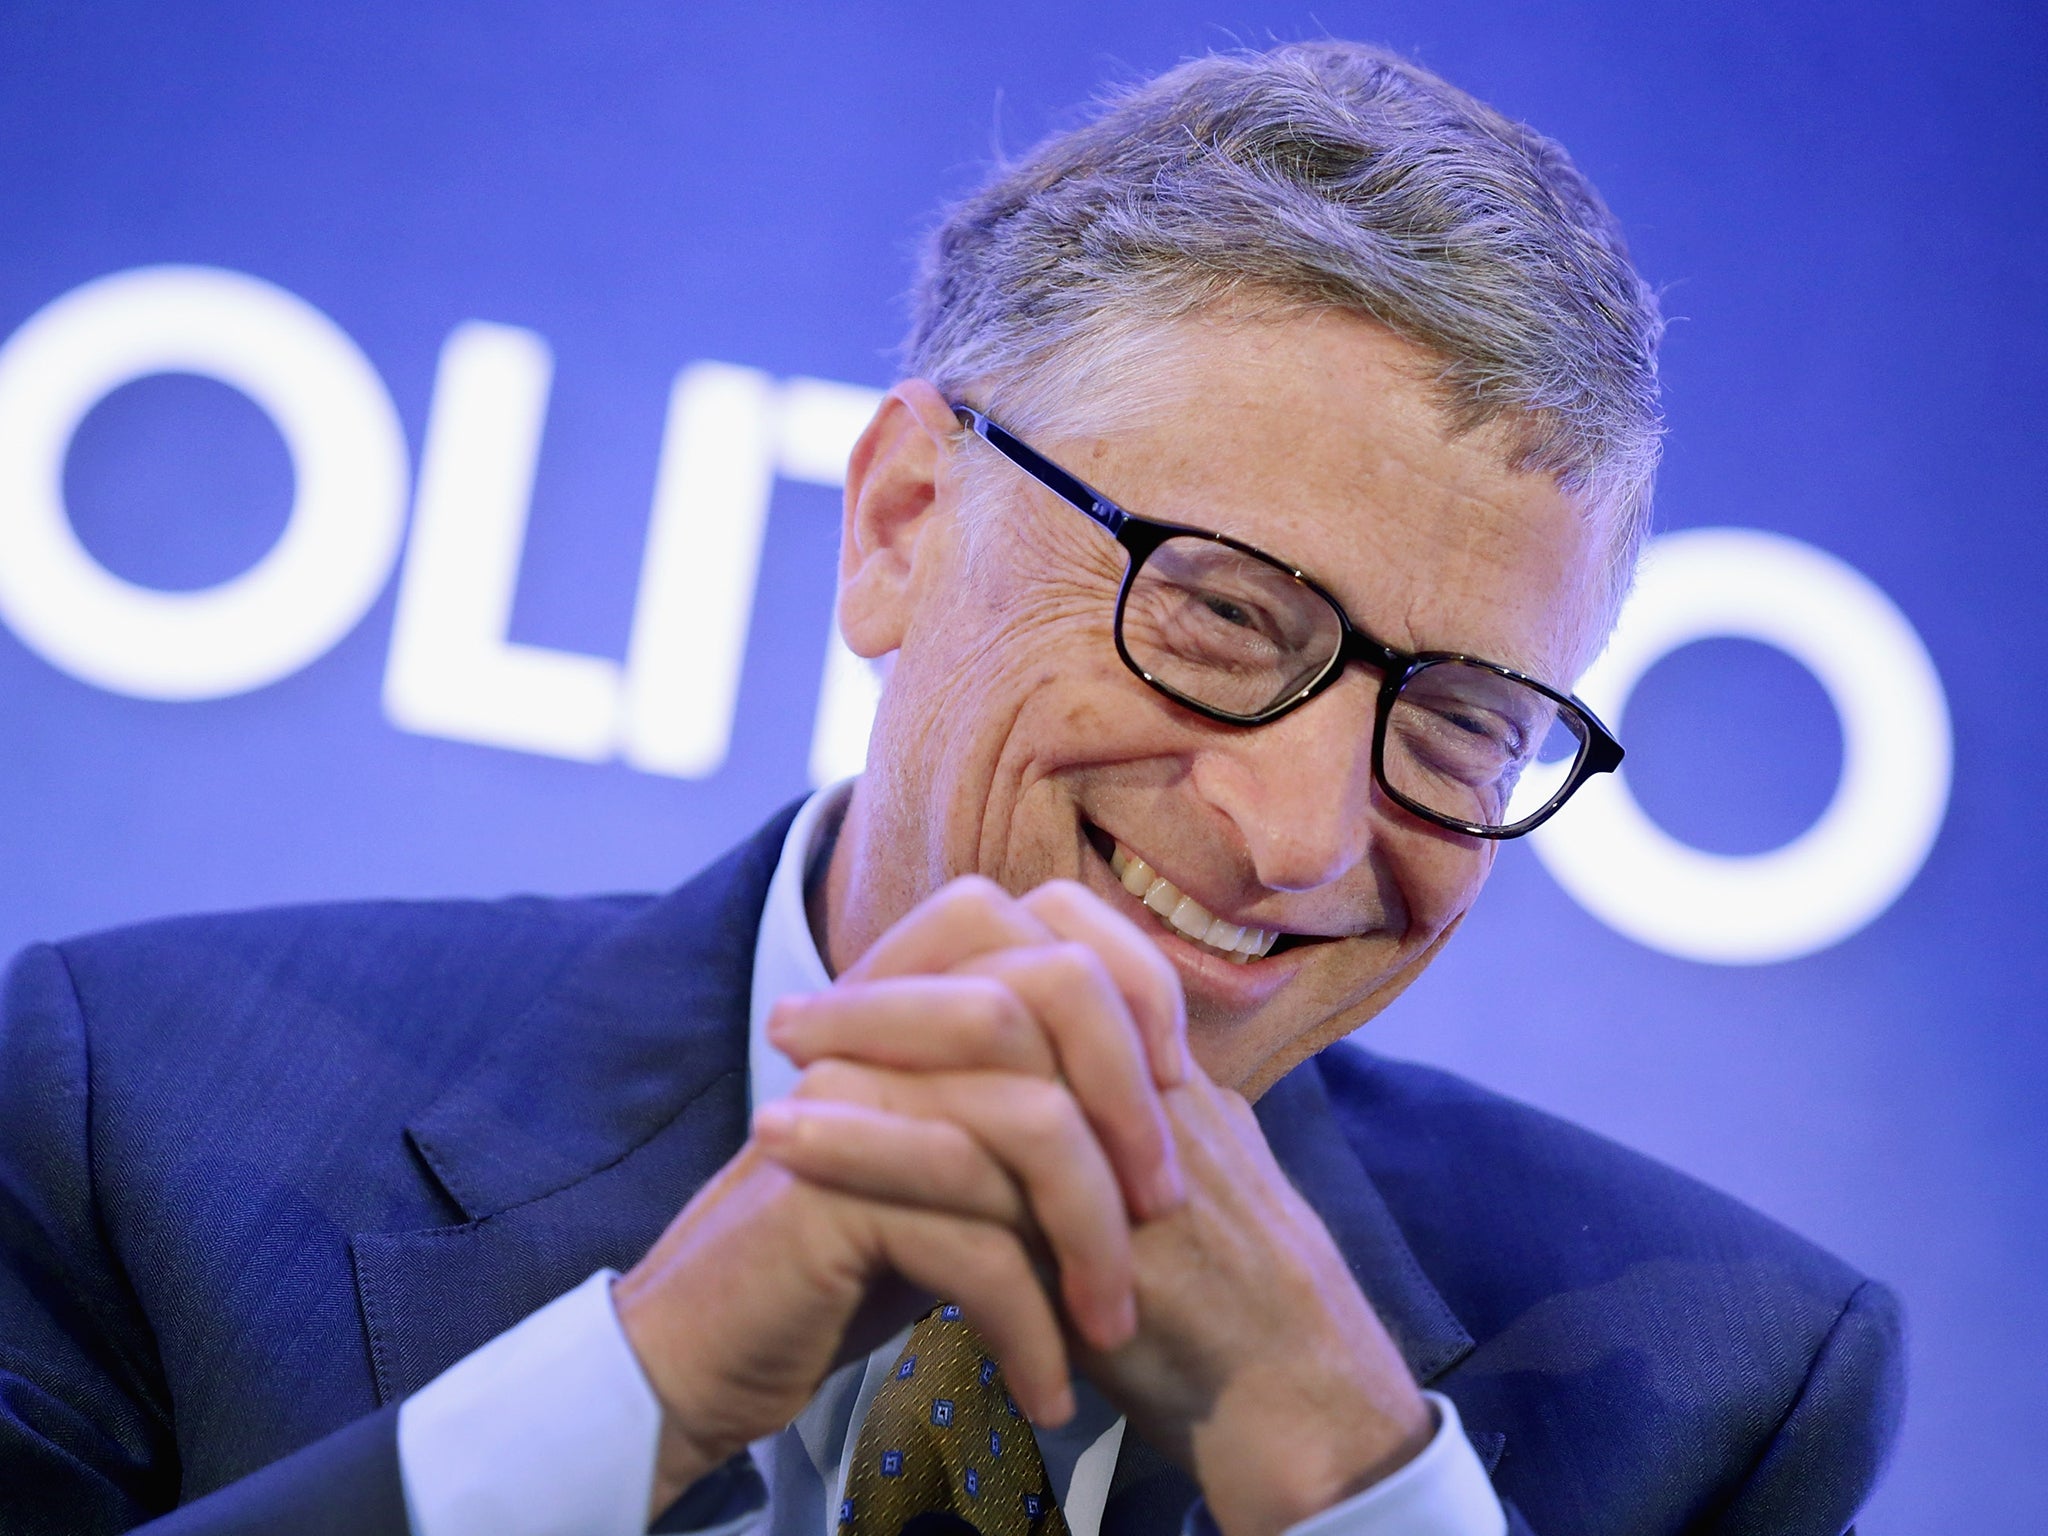 Bill Gates is worth $85bn